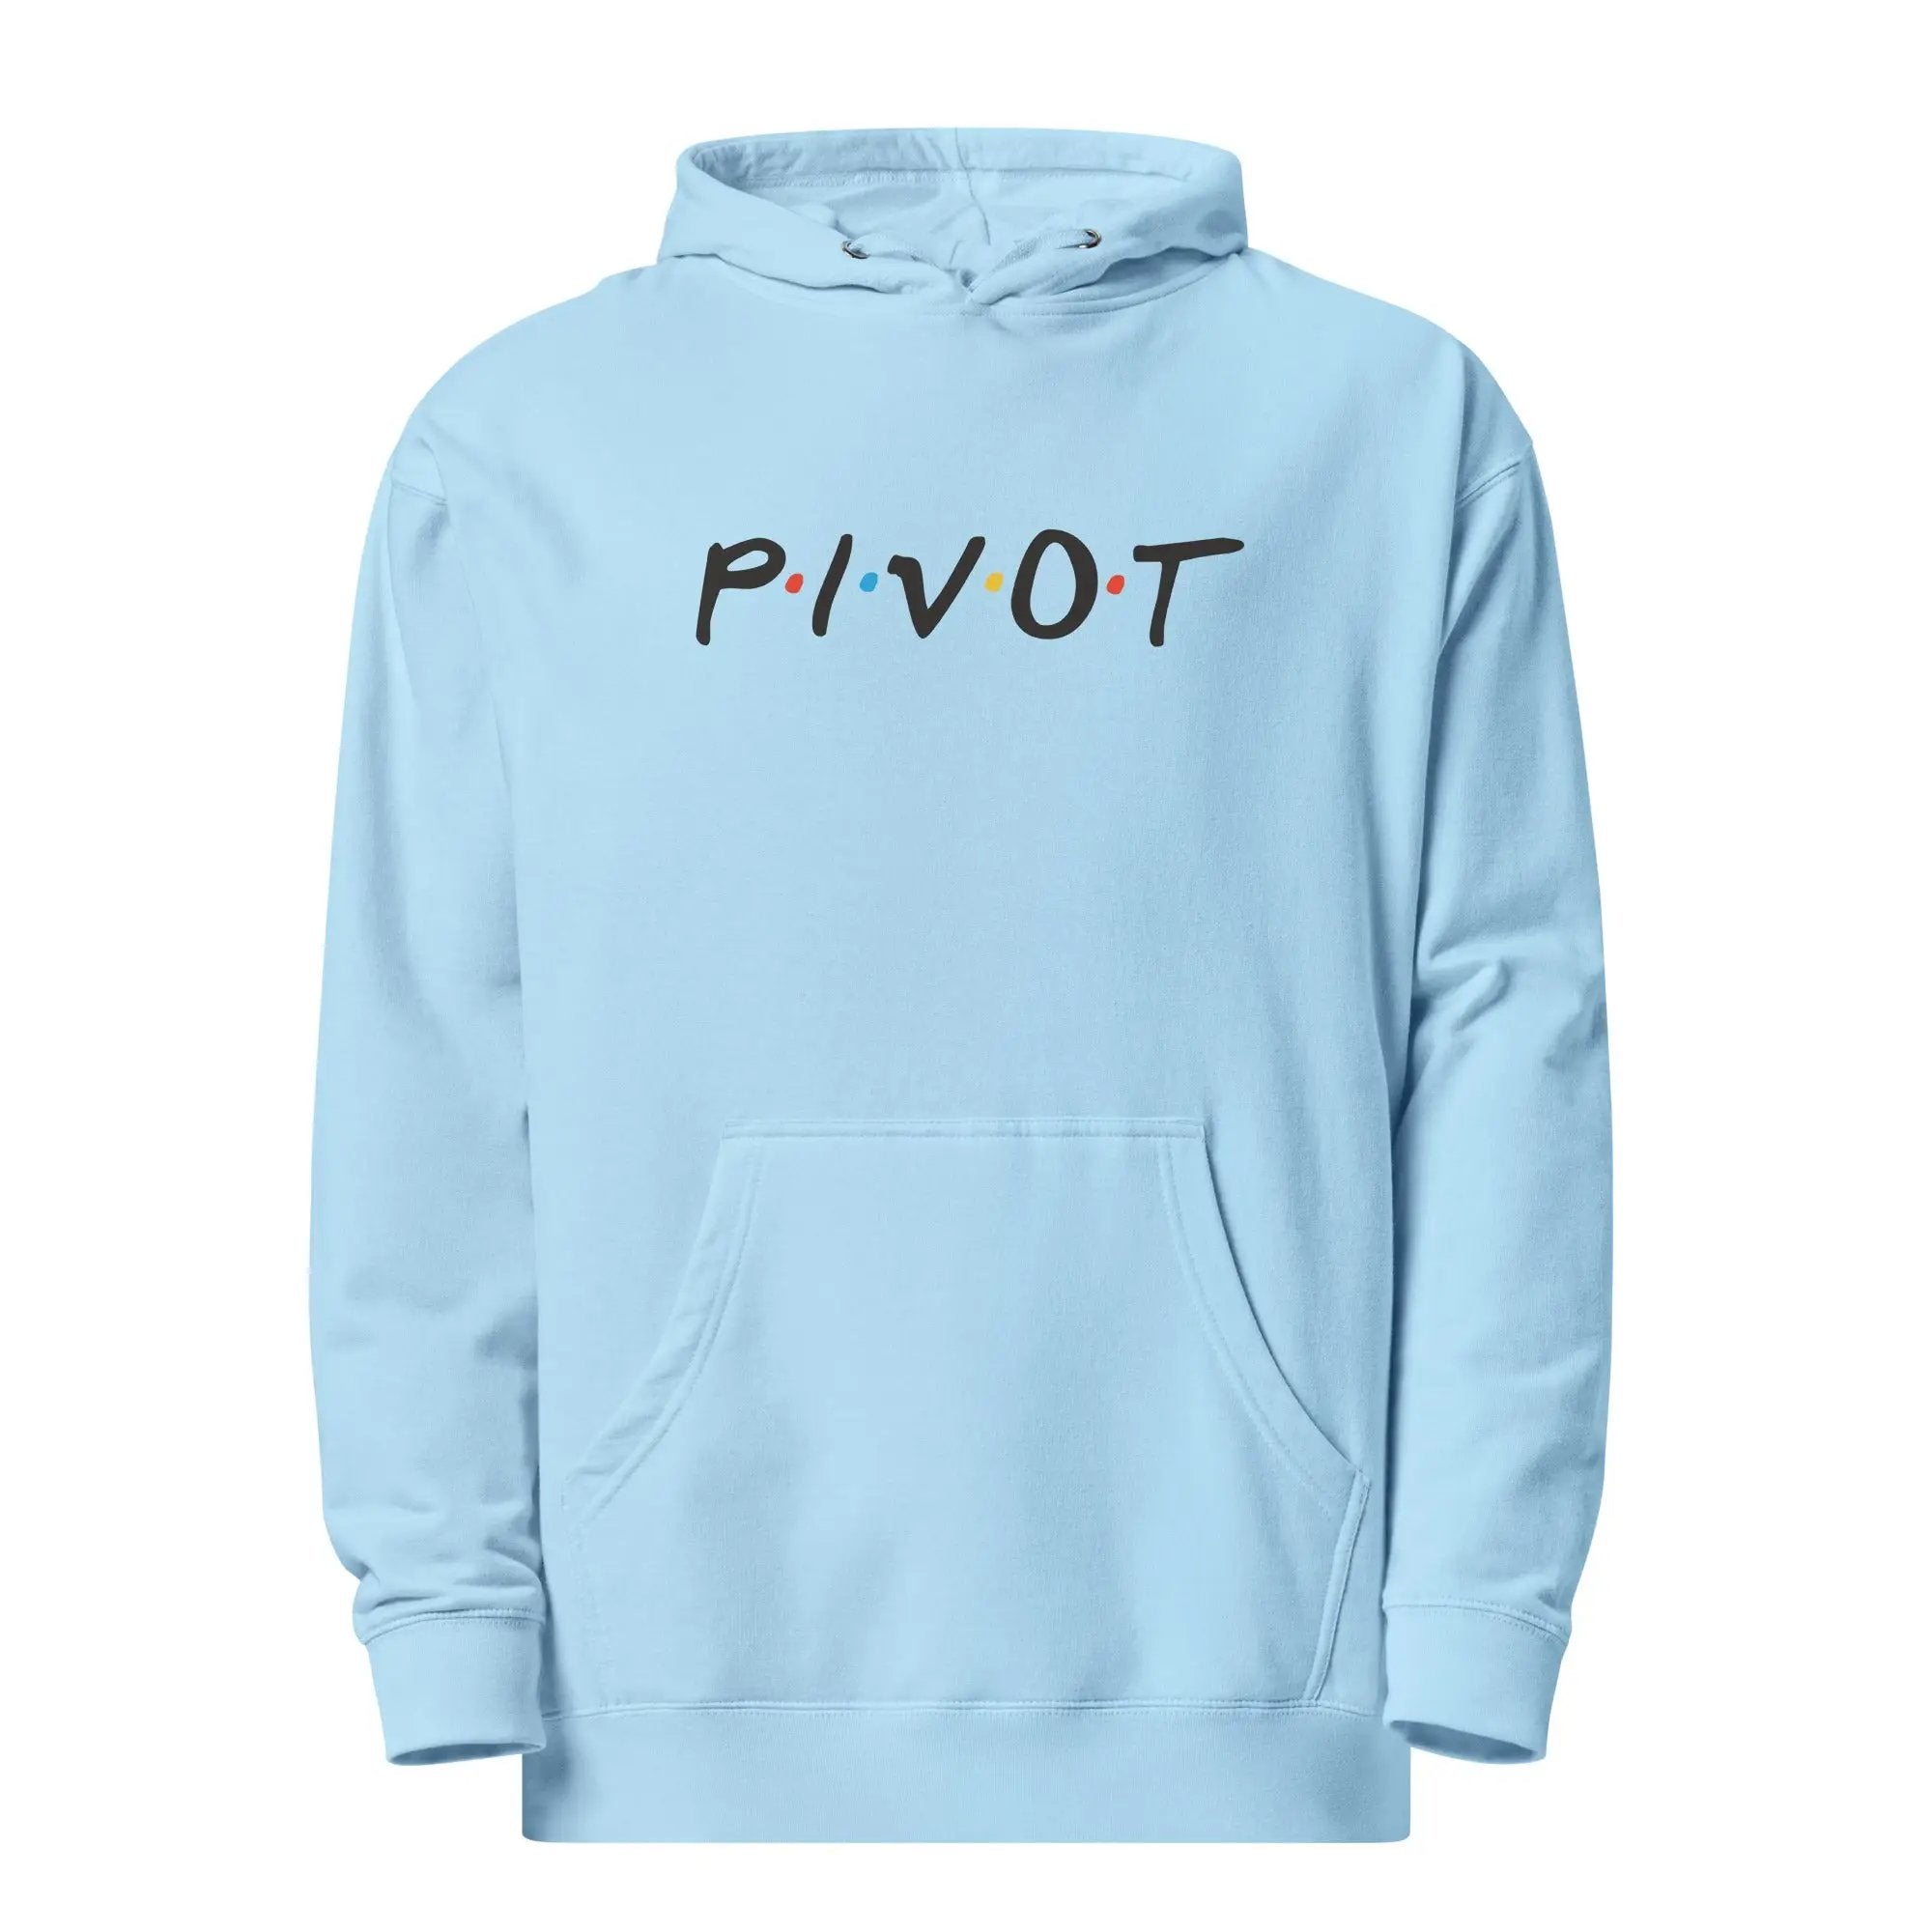 PIVOT! Unisex midweight hoodie